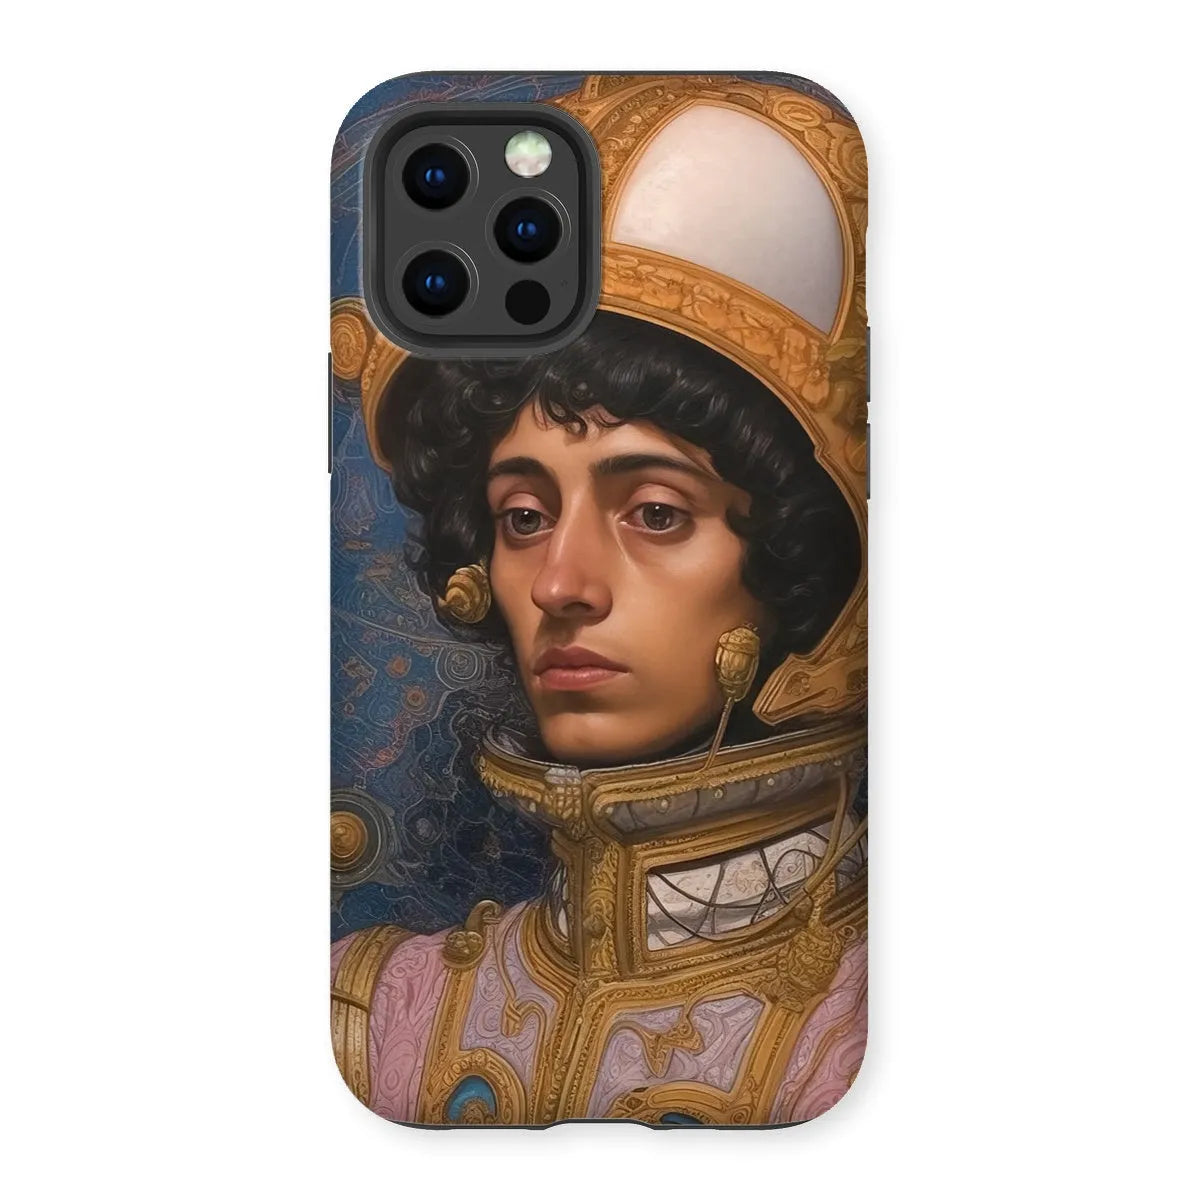 Samir The Gay Astronaut - Lgbtq Art Phone Case - Iphone 12 Pro / Matte - Mobile Phone Cases - Aesthetic Art